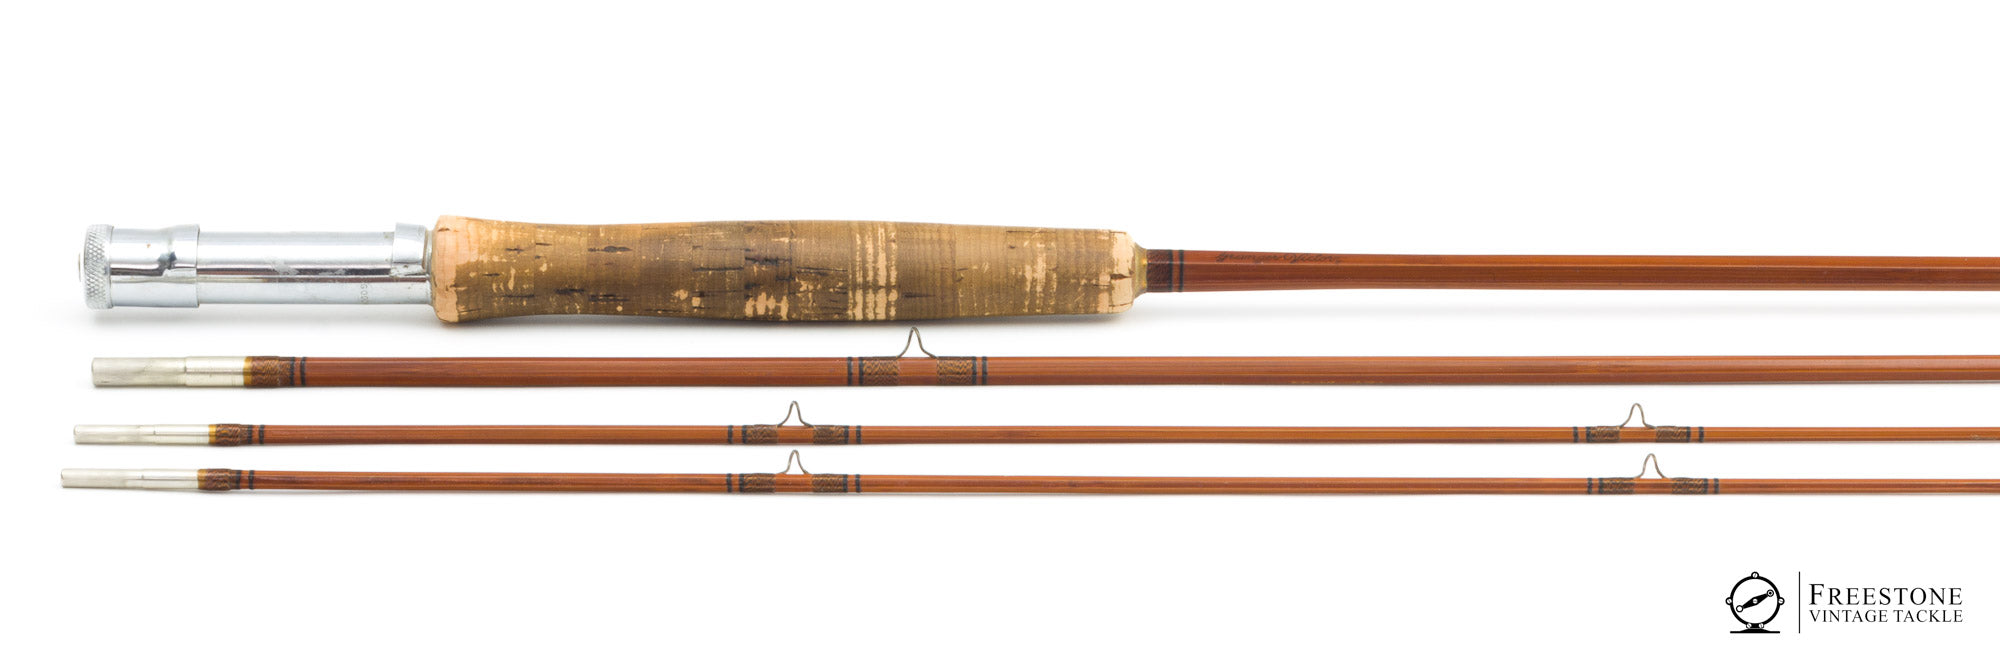 Granger, Goodwin - Granger Victory 8642, 8'6 3/2, 5-6wt Bamboo Rod -  Freestone Vintage Tackle